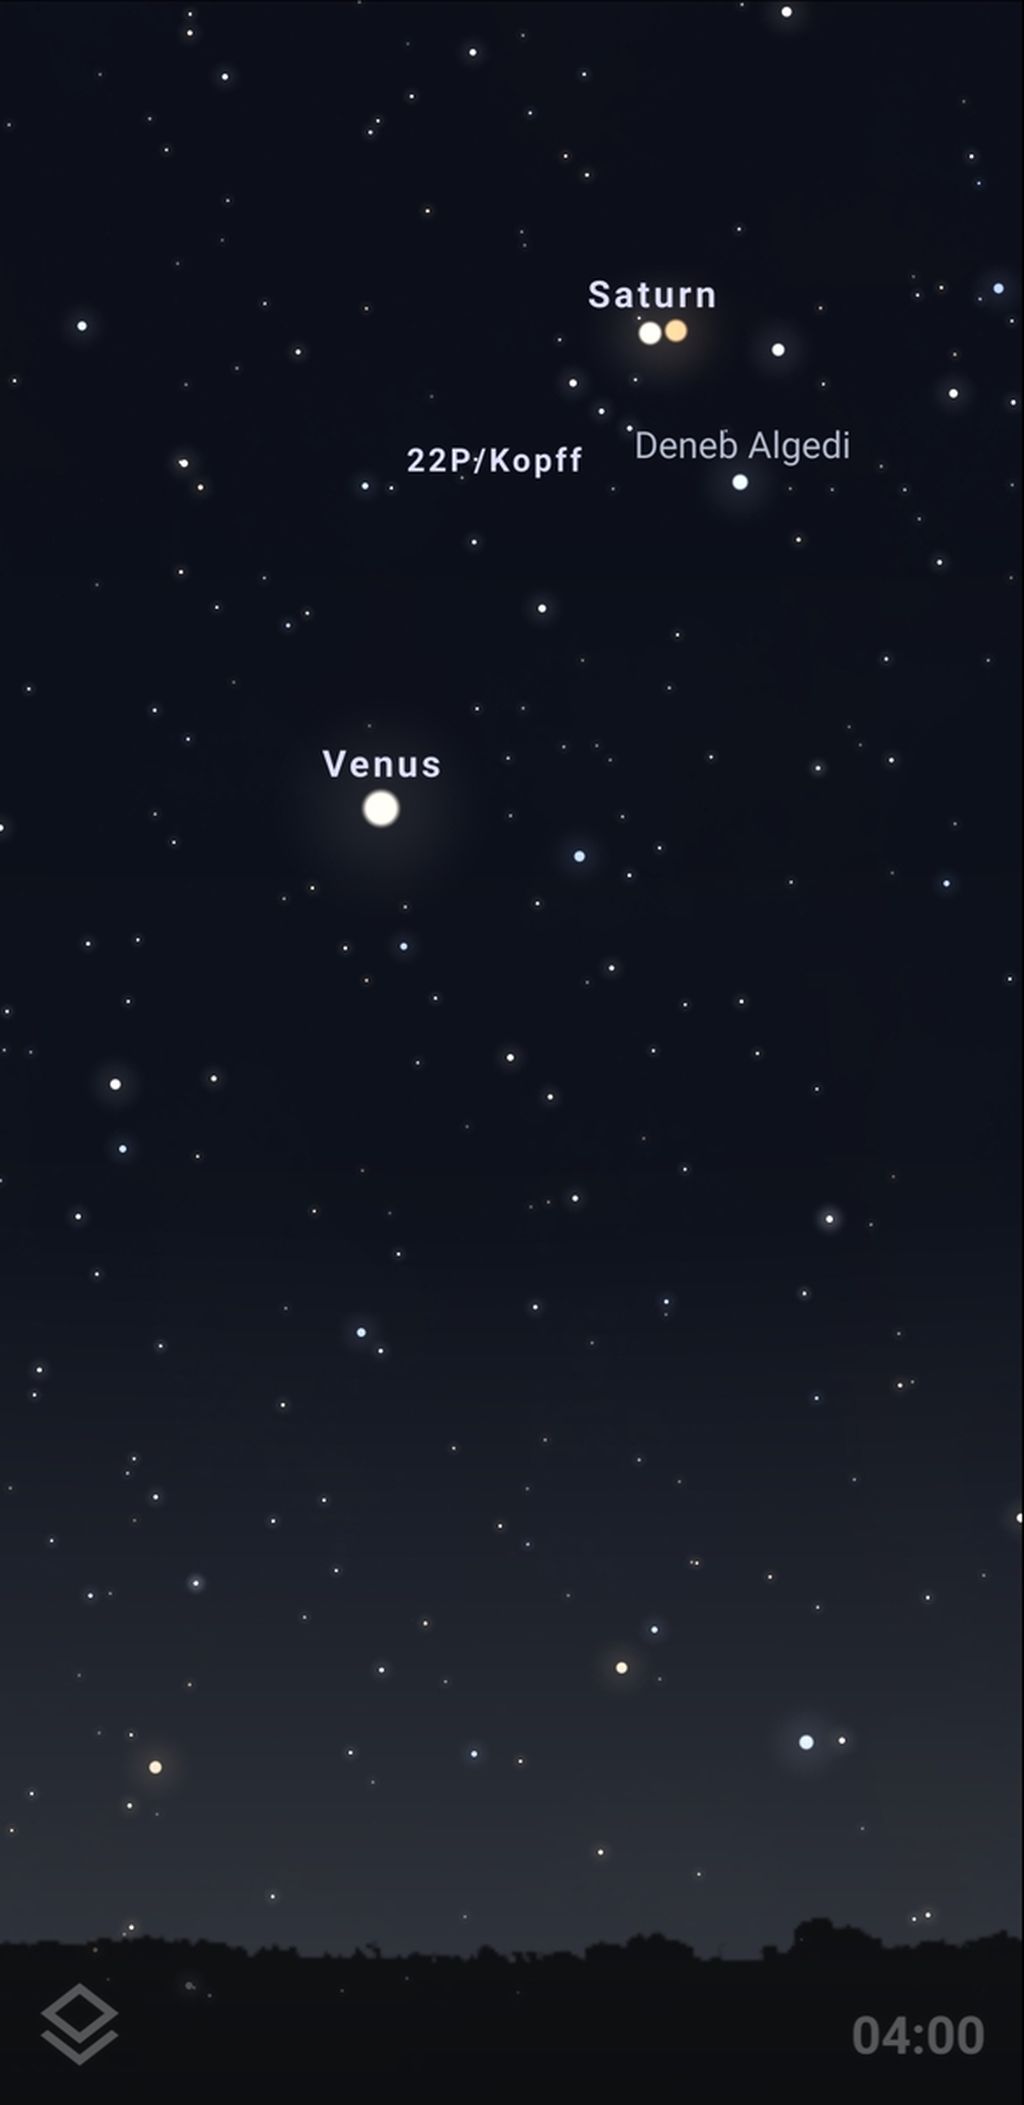 Ilustrasi pemandangan langit yang diambil dengan lokasi Tangerang Selatan, Banten, Selasa (5/4/2022) pukul 04.00 WIB ke arah timur, menggunakan aplikasi Stellarium. Pada saat tersebut, Saturnus yang putih kekuningan bersanding dengan Mars yang merah. Venus terlihat kuning berkilauan di kiri bawah.